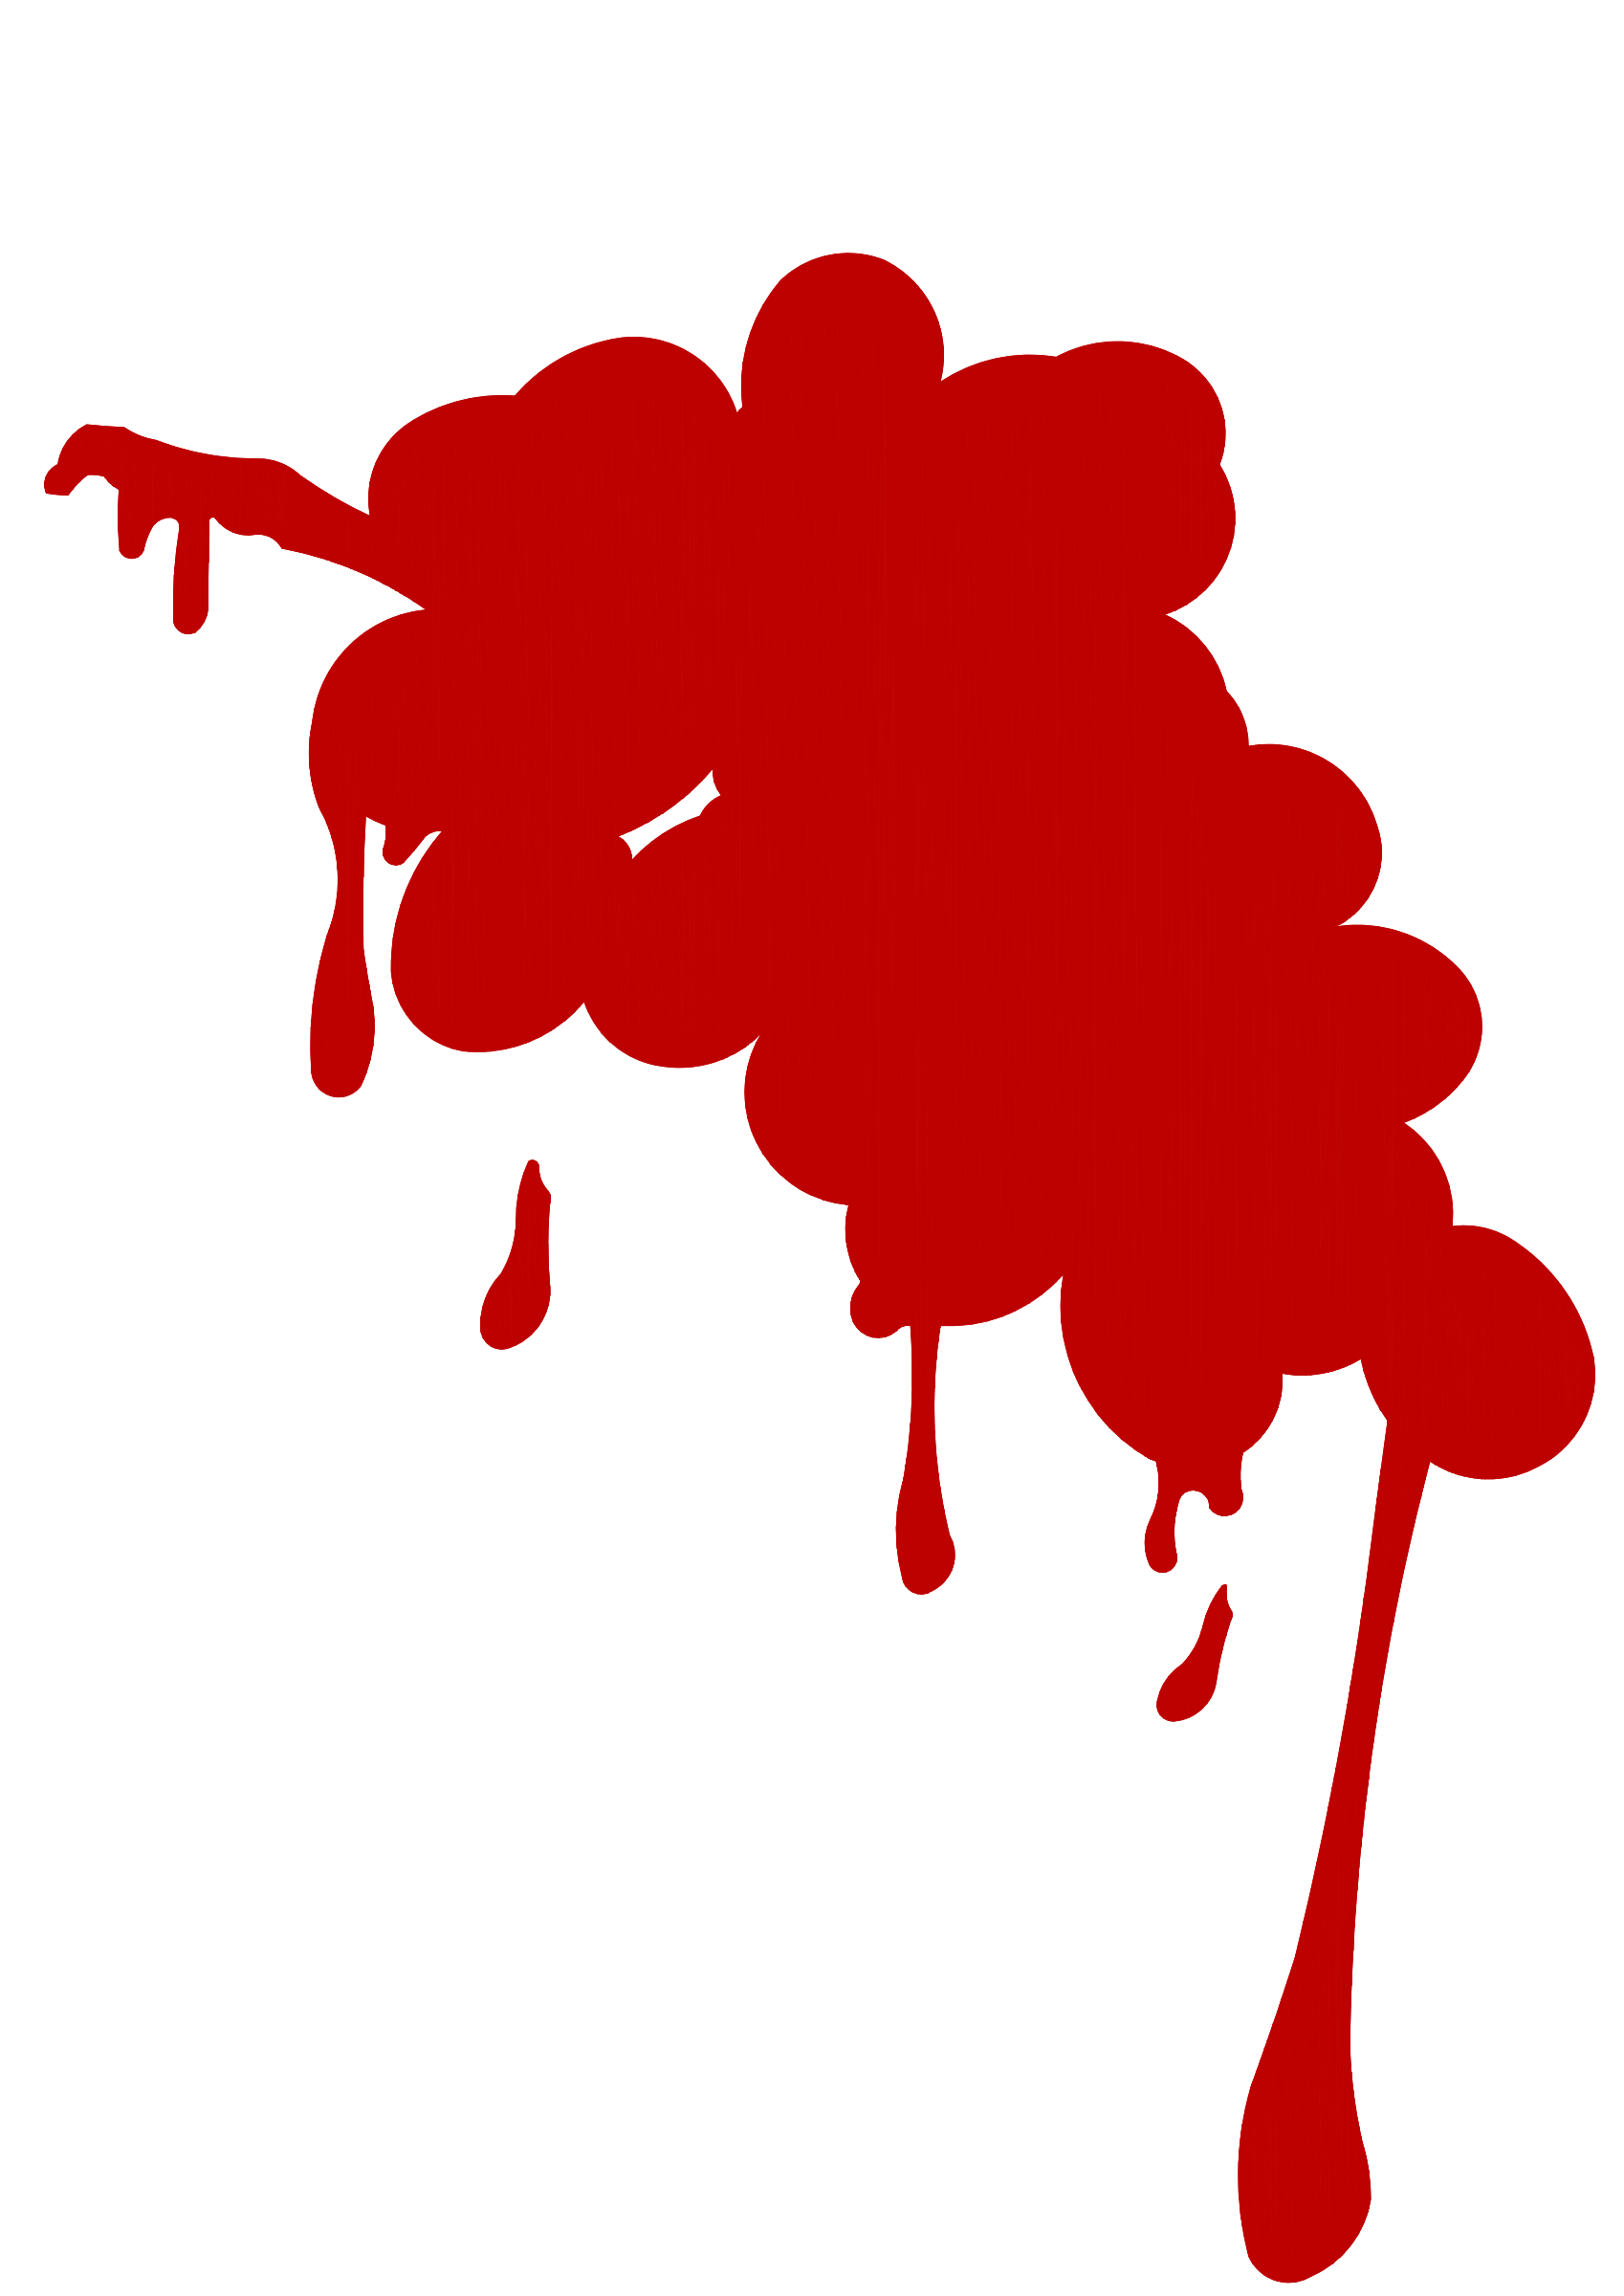 Christ blood (wine) SVG Clip arts